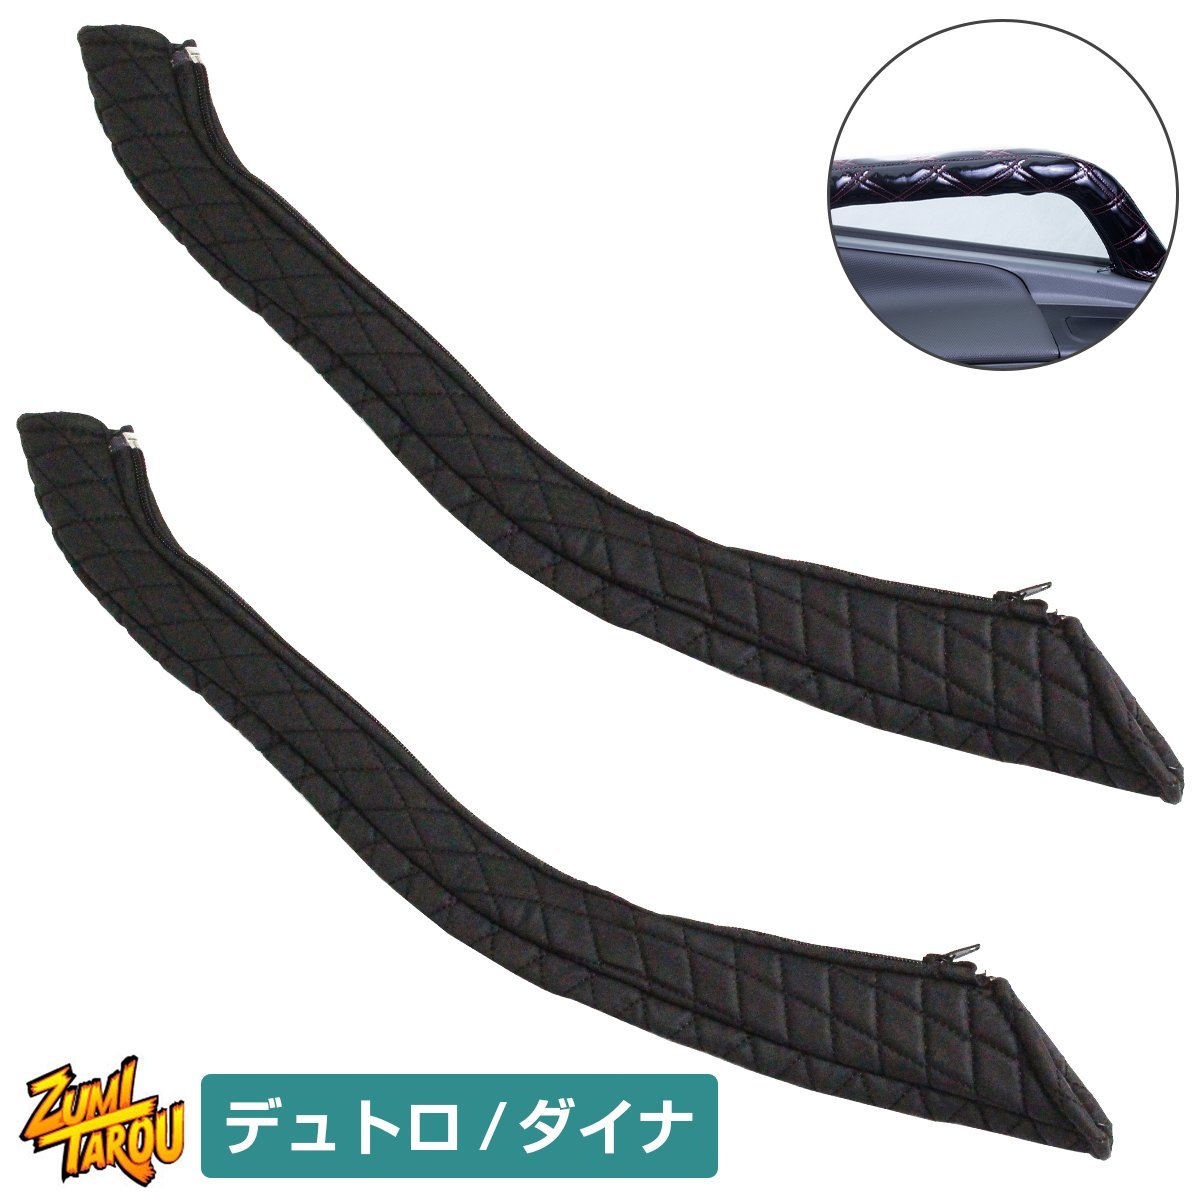  Dutro / Dyna door quilt steering wheel cover velour black mo Como kon back style mud black black single stitch 